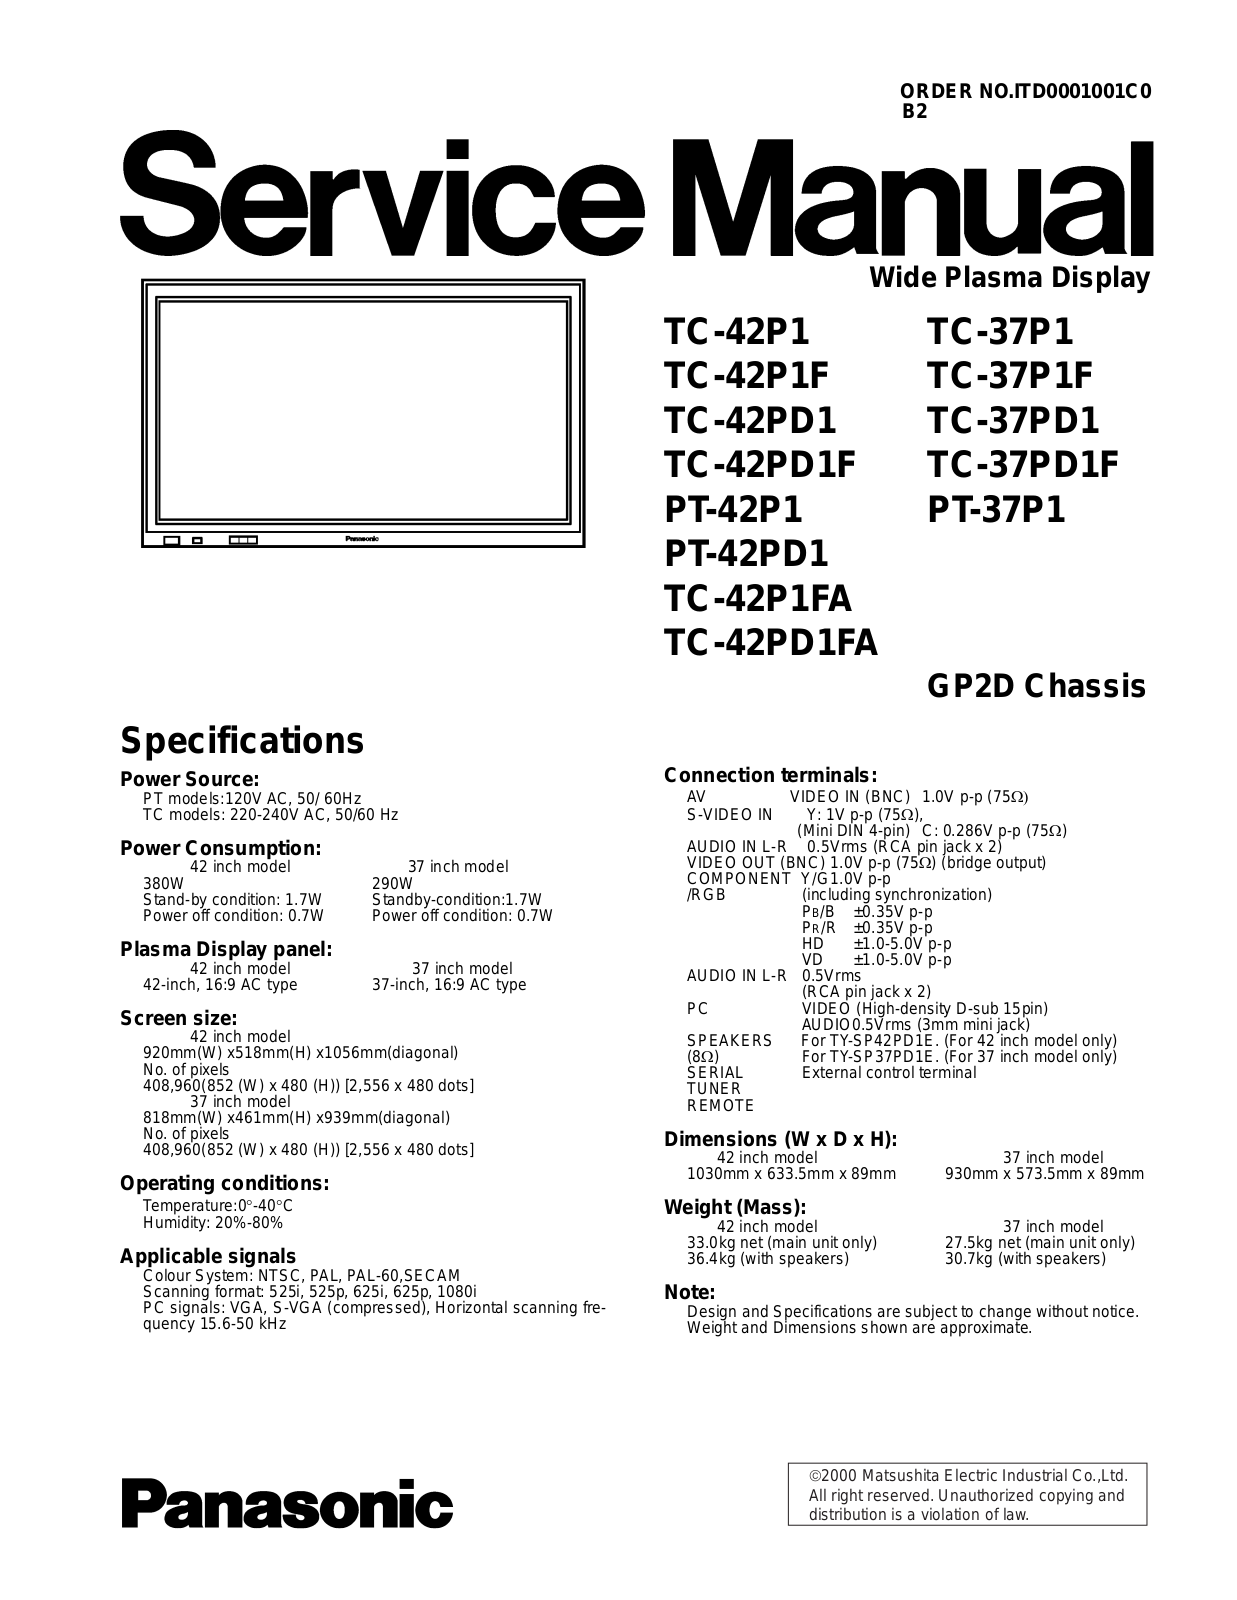 panasonic TC-42P1, TC-37P1, TC-42P1F, TC-37P1F, TC-42PD1 Service Manual